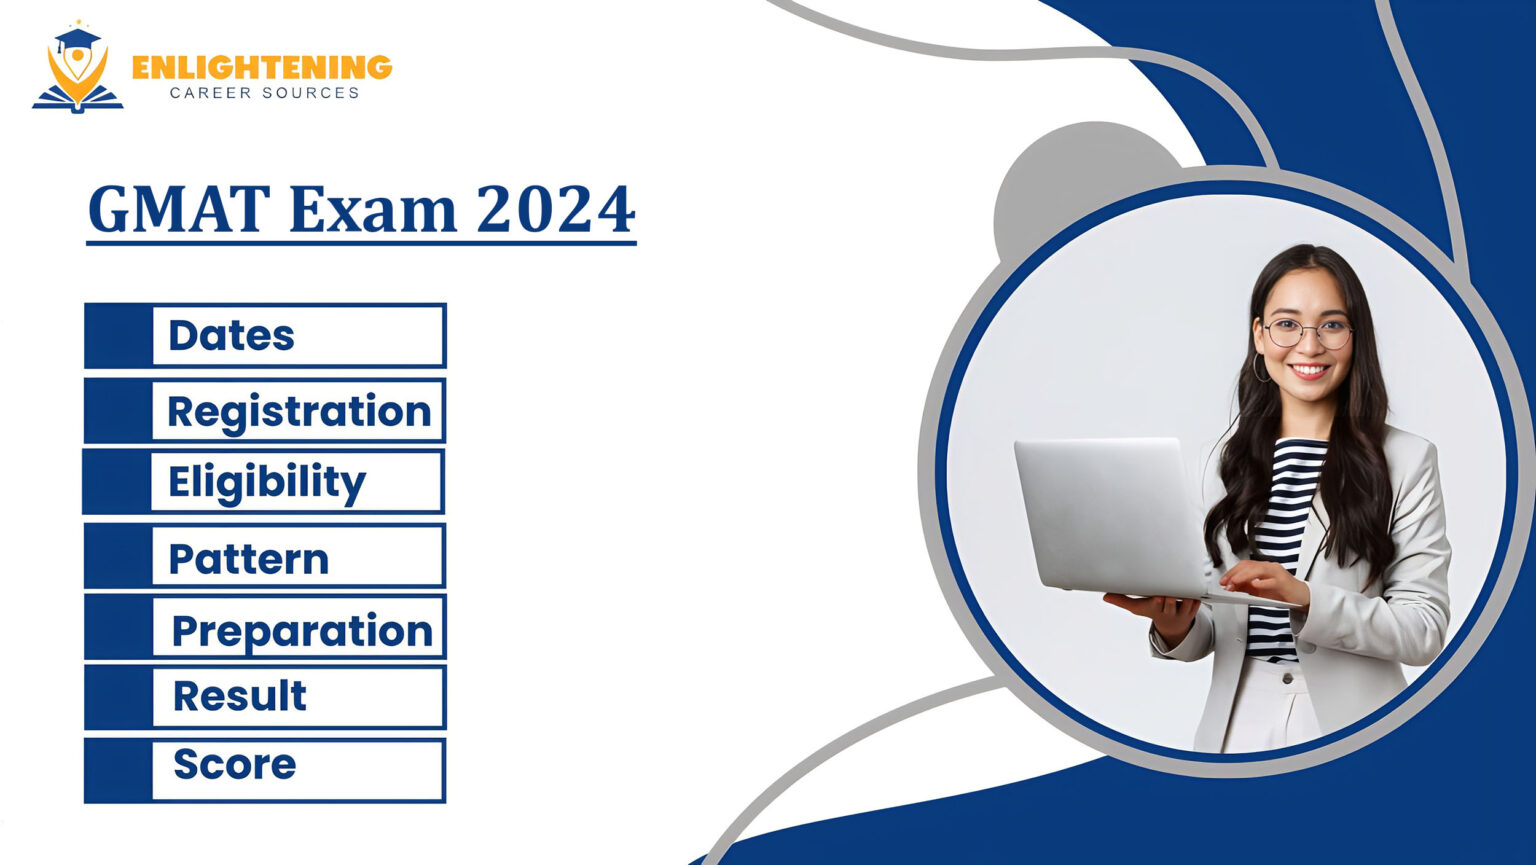 GMAT Exam 2024 Dates, Registration, Eligibility, Pattern, Preparation